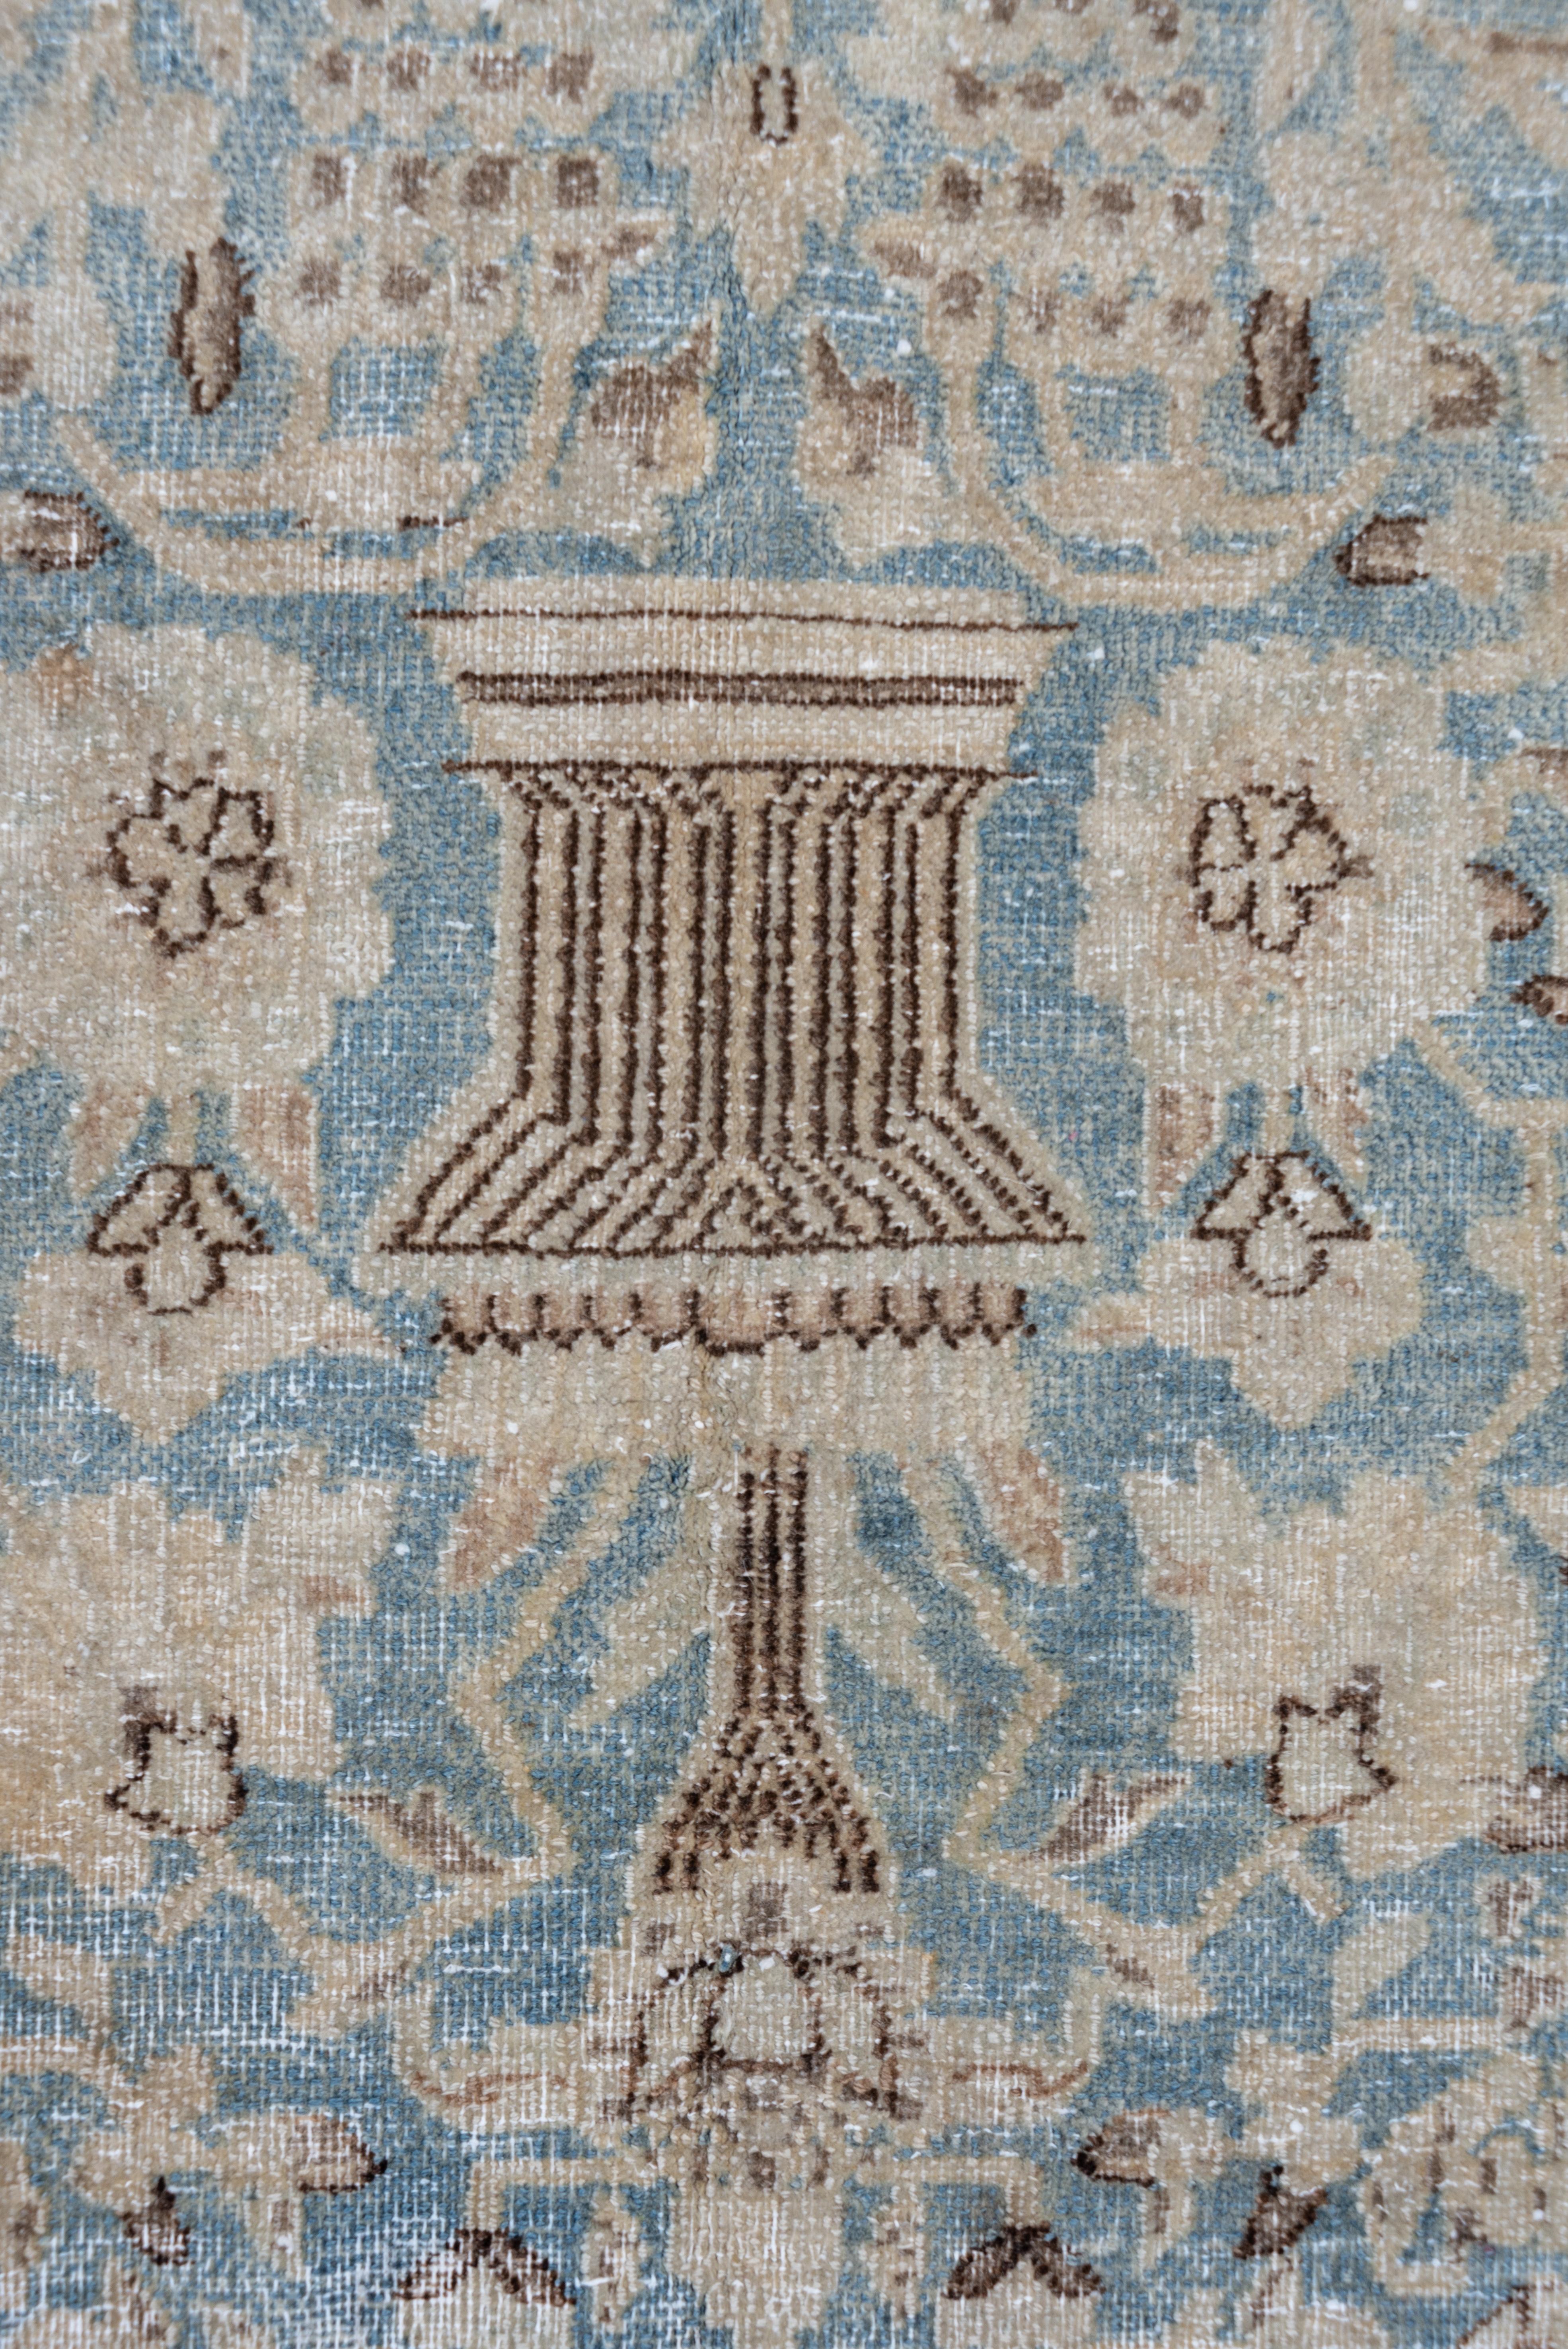 Light Blue Antique Persian Kerman Carpet with Vase Design, Allover Field For Sale 1